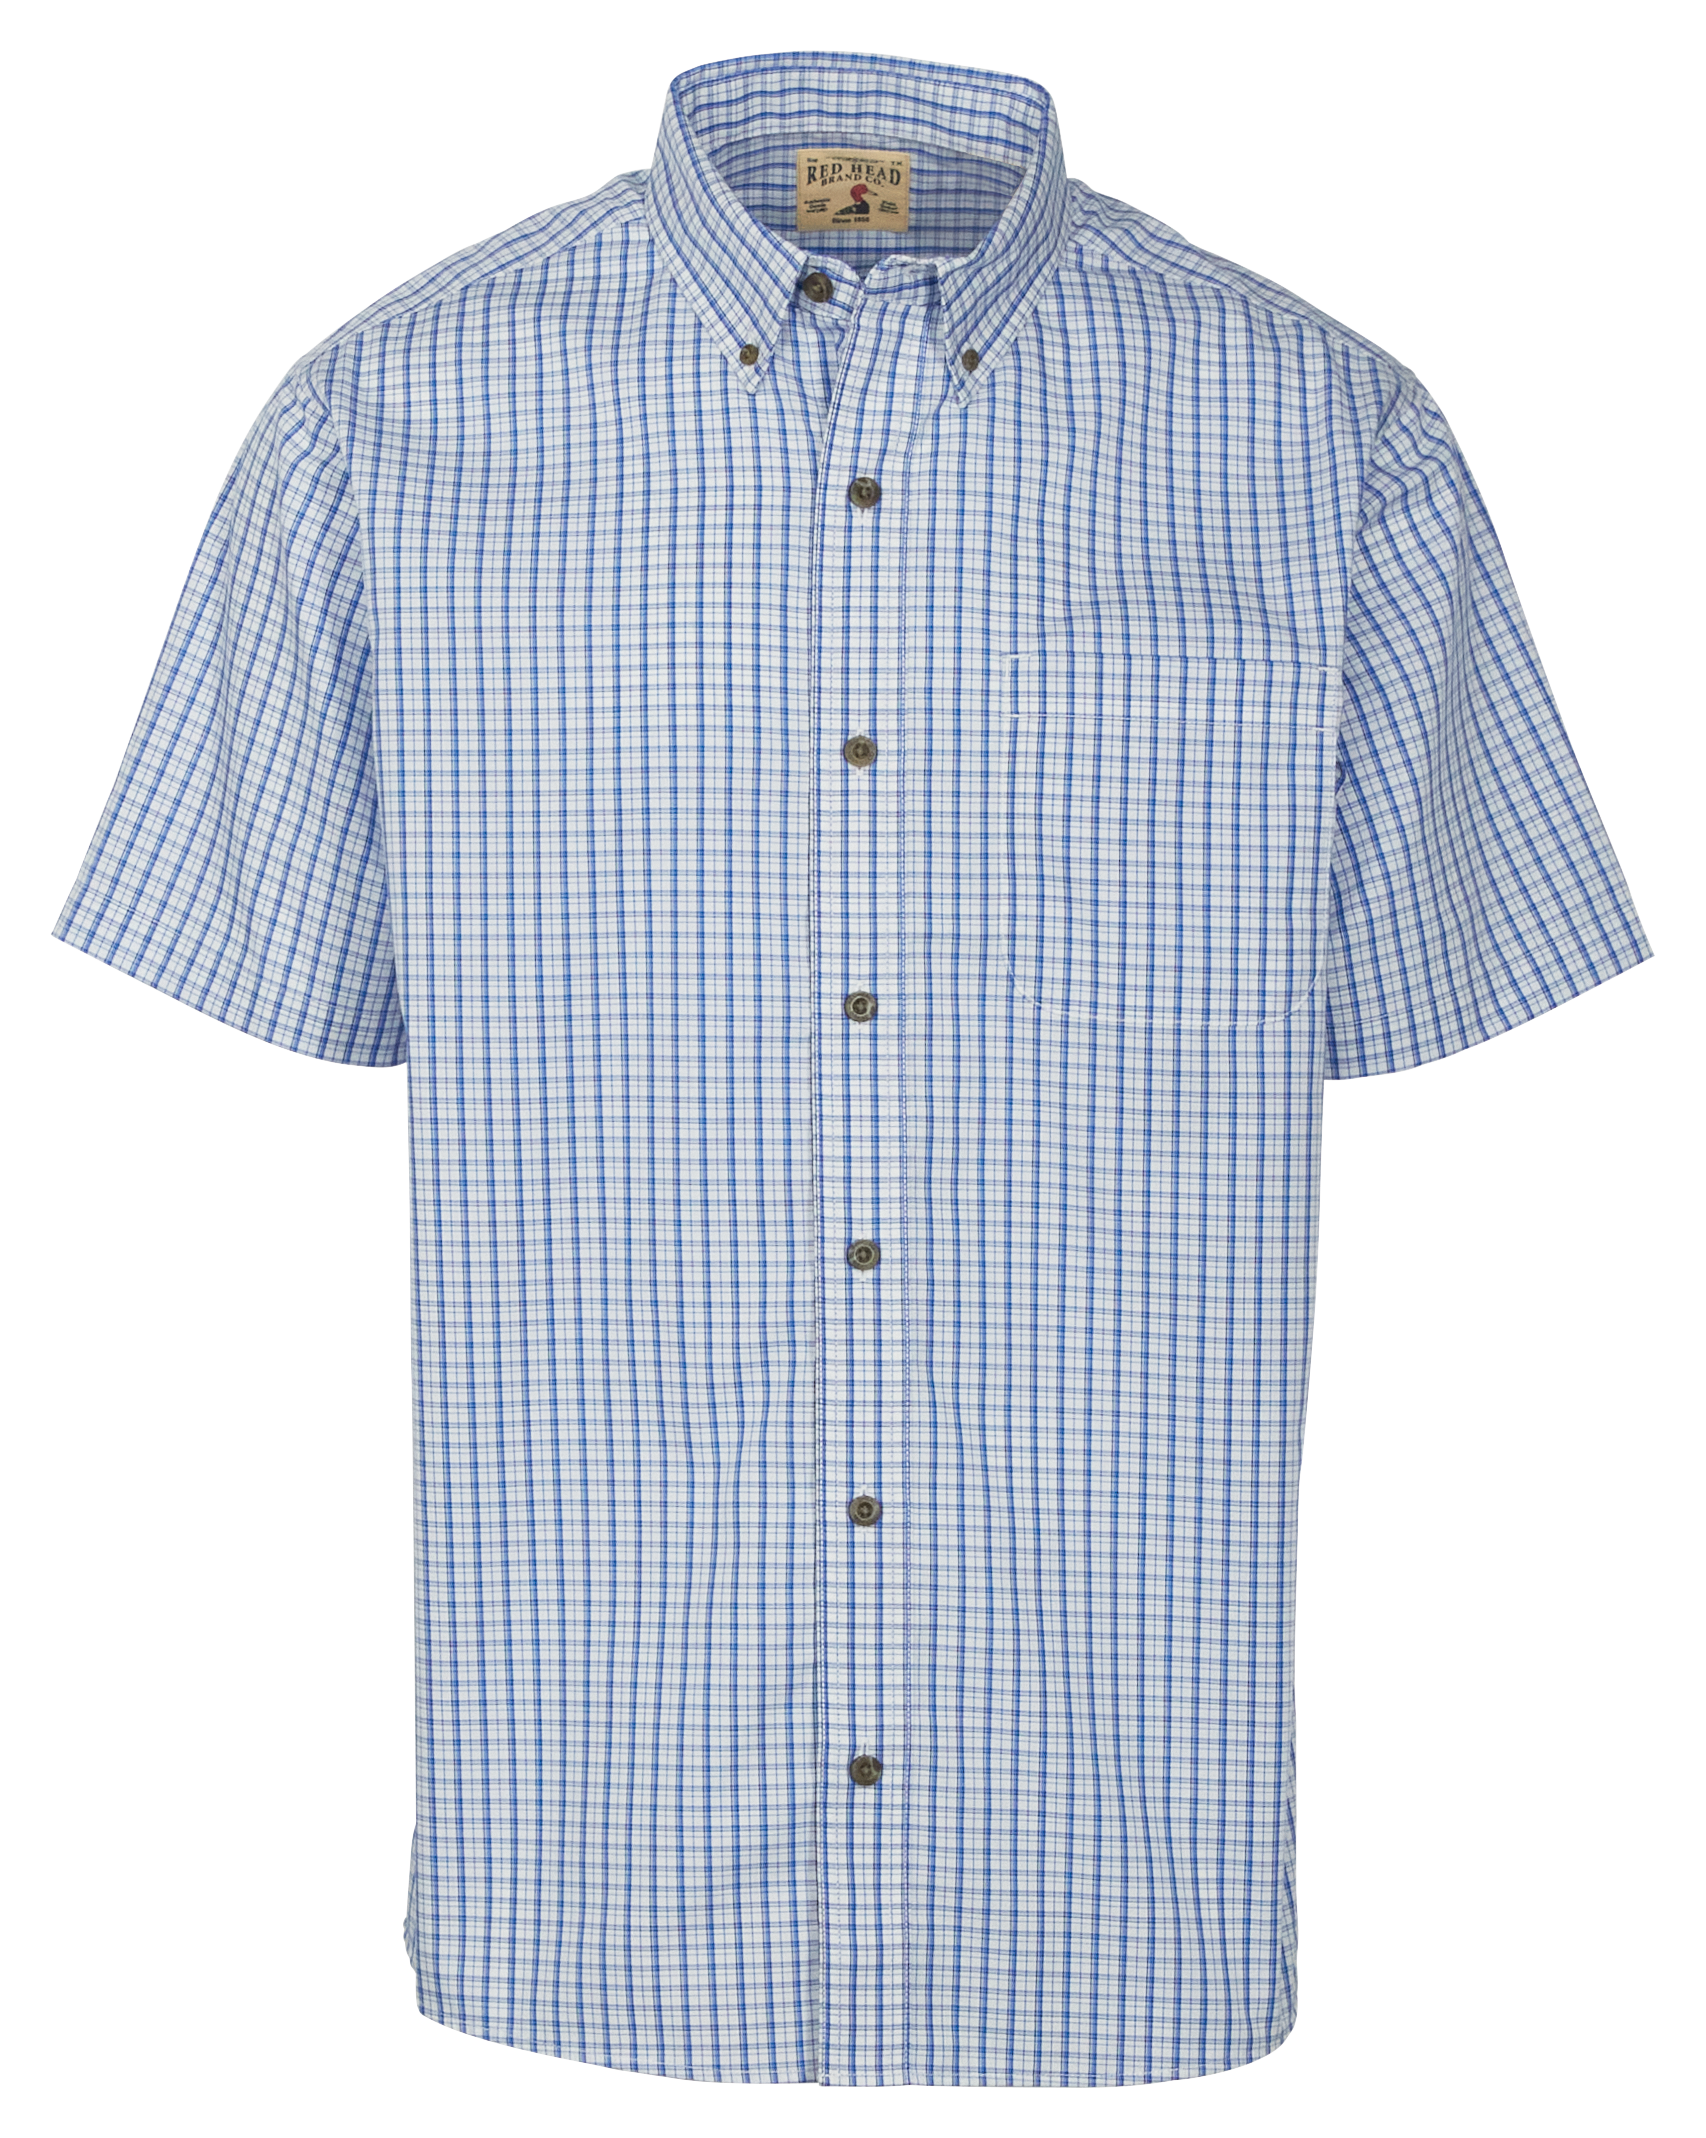 Redhead Wrinkle-Free Plaid Short-Sleeve Button-Down Shirt for Men - Gray Check - XL